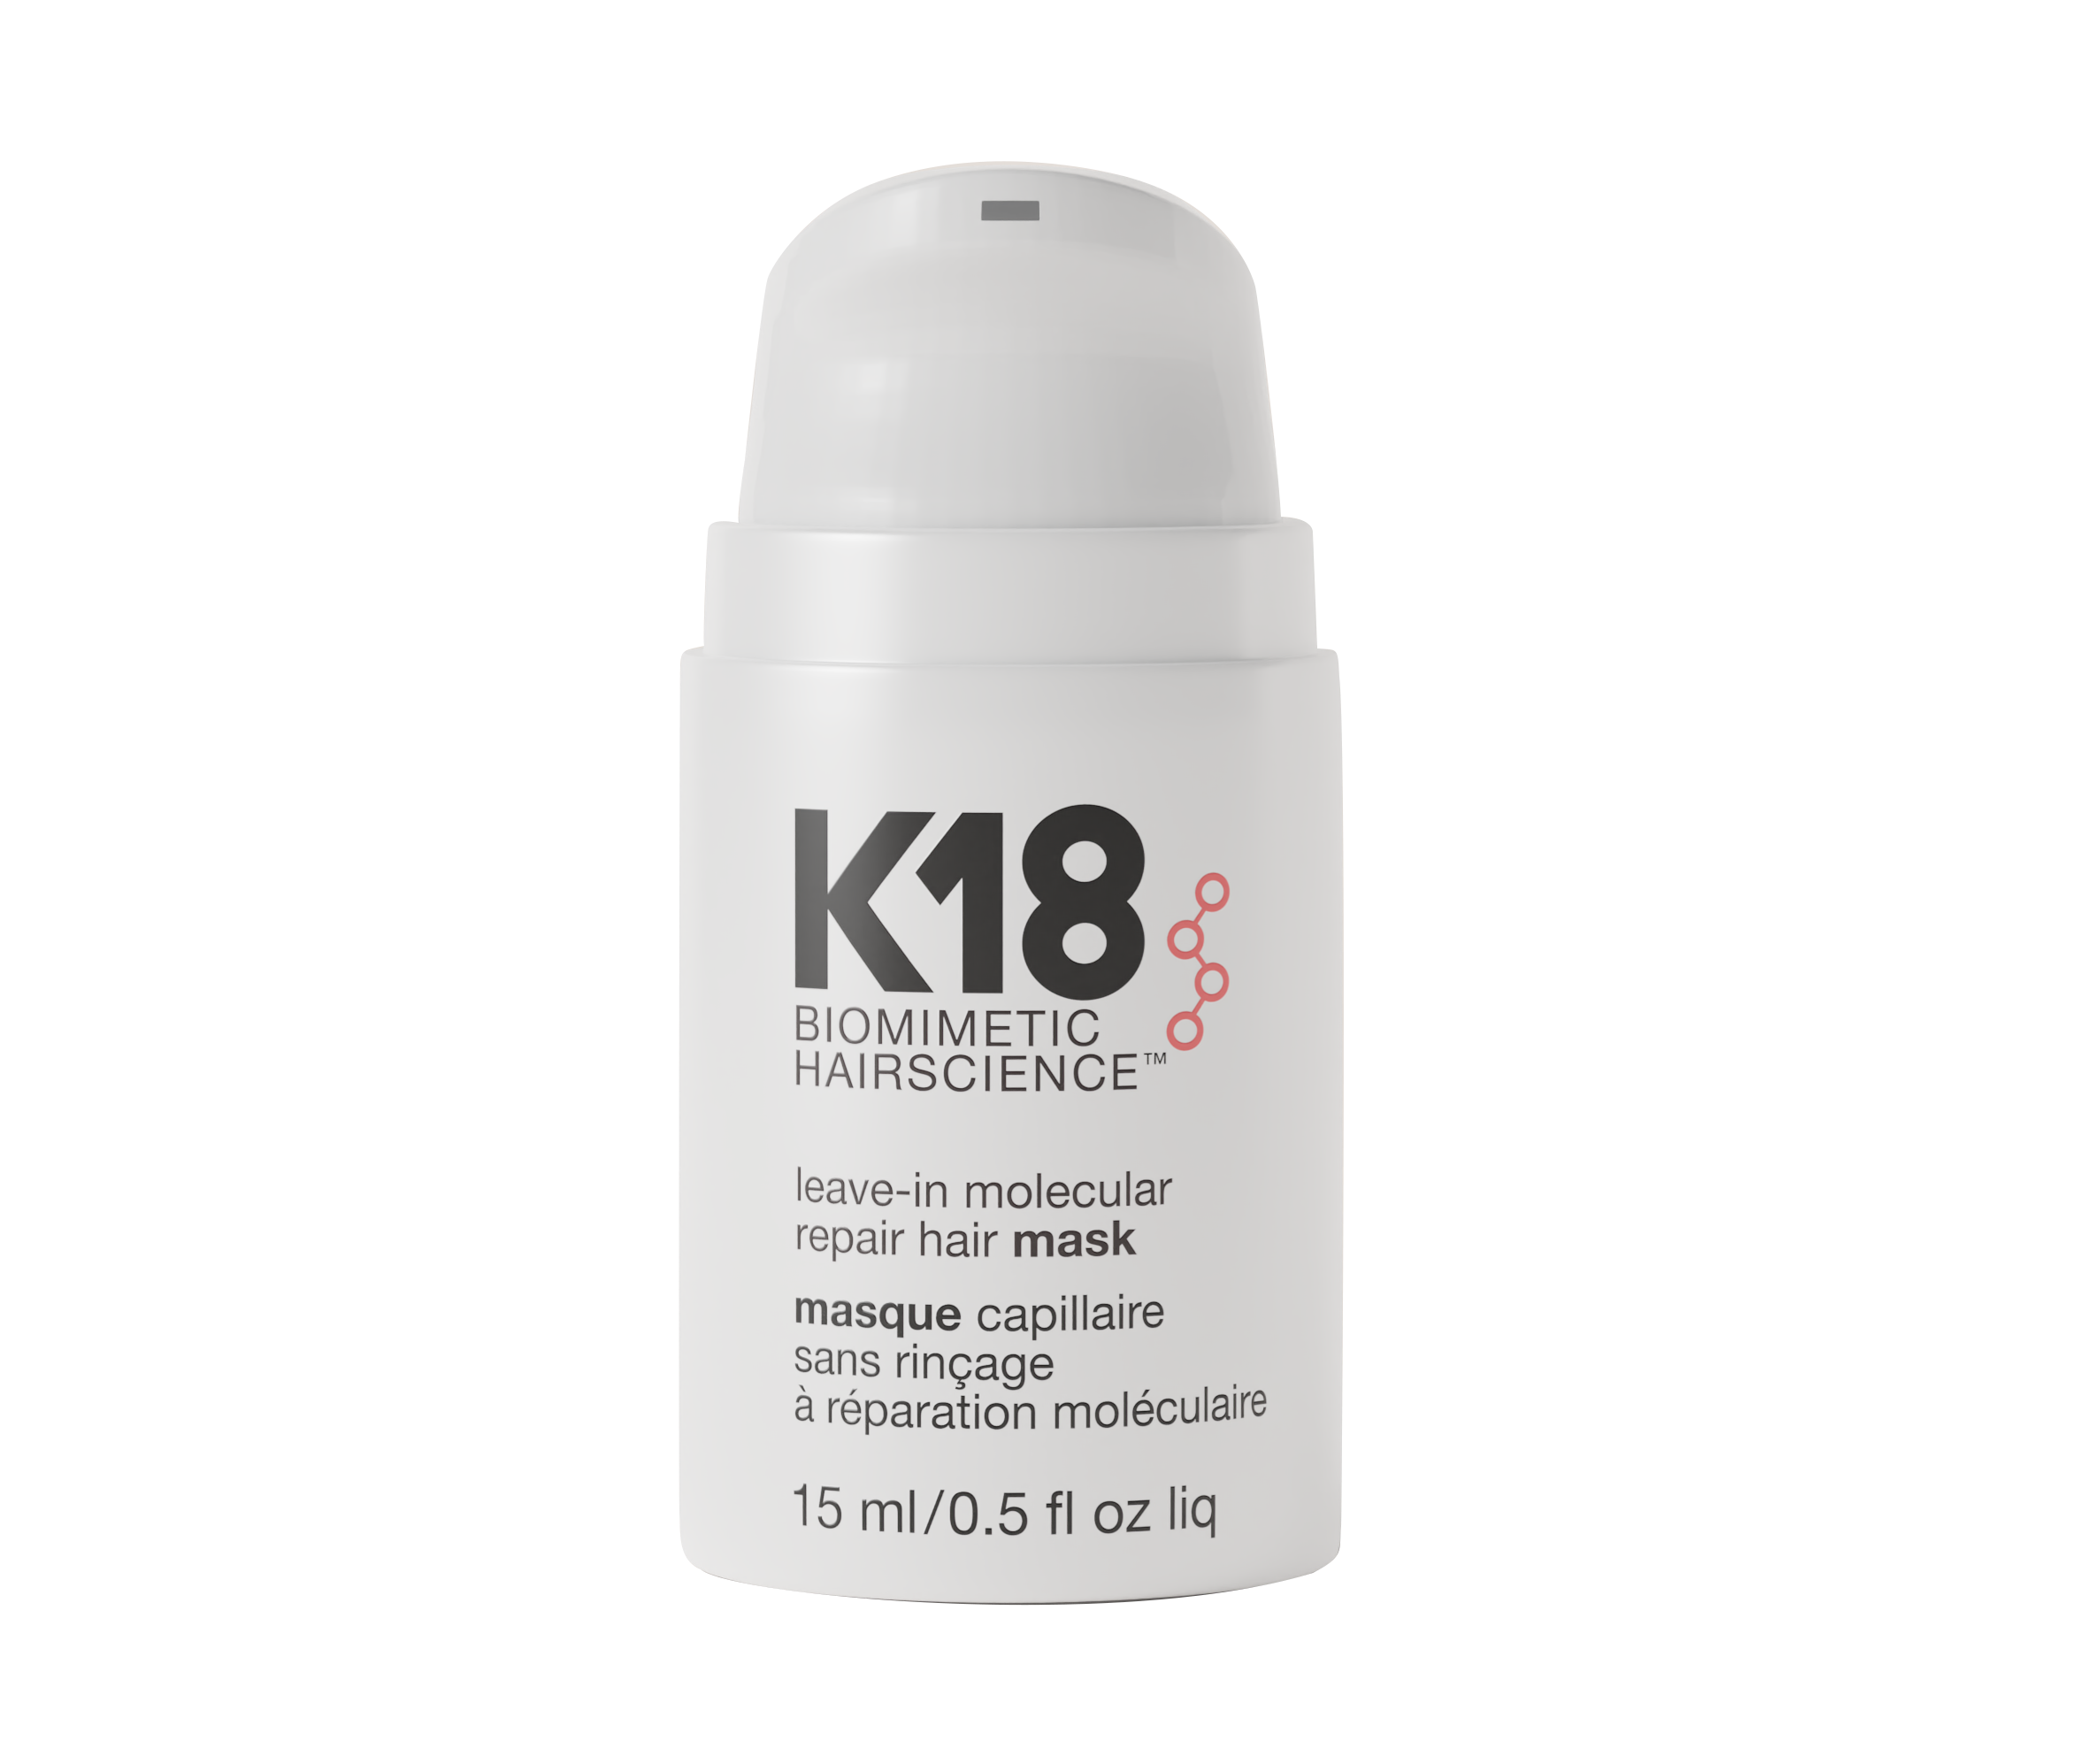 Маска 18.03 24. K18 leave-in Molecular Repair hair Mask. K18 маска. Treatment - для молекулярного восстановления волос. K18 маска 150мл.